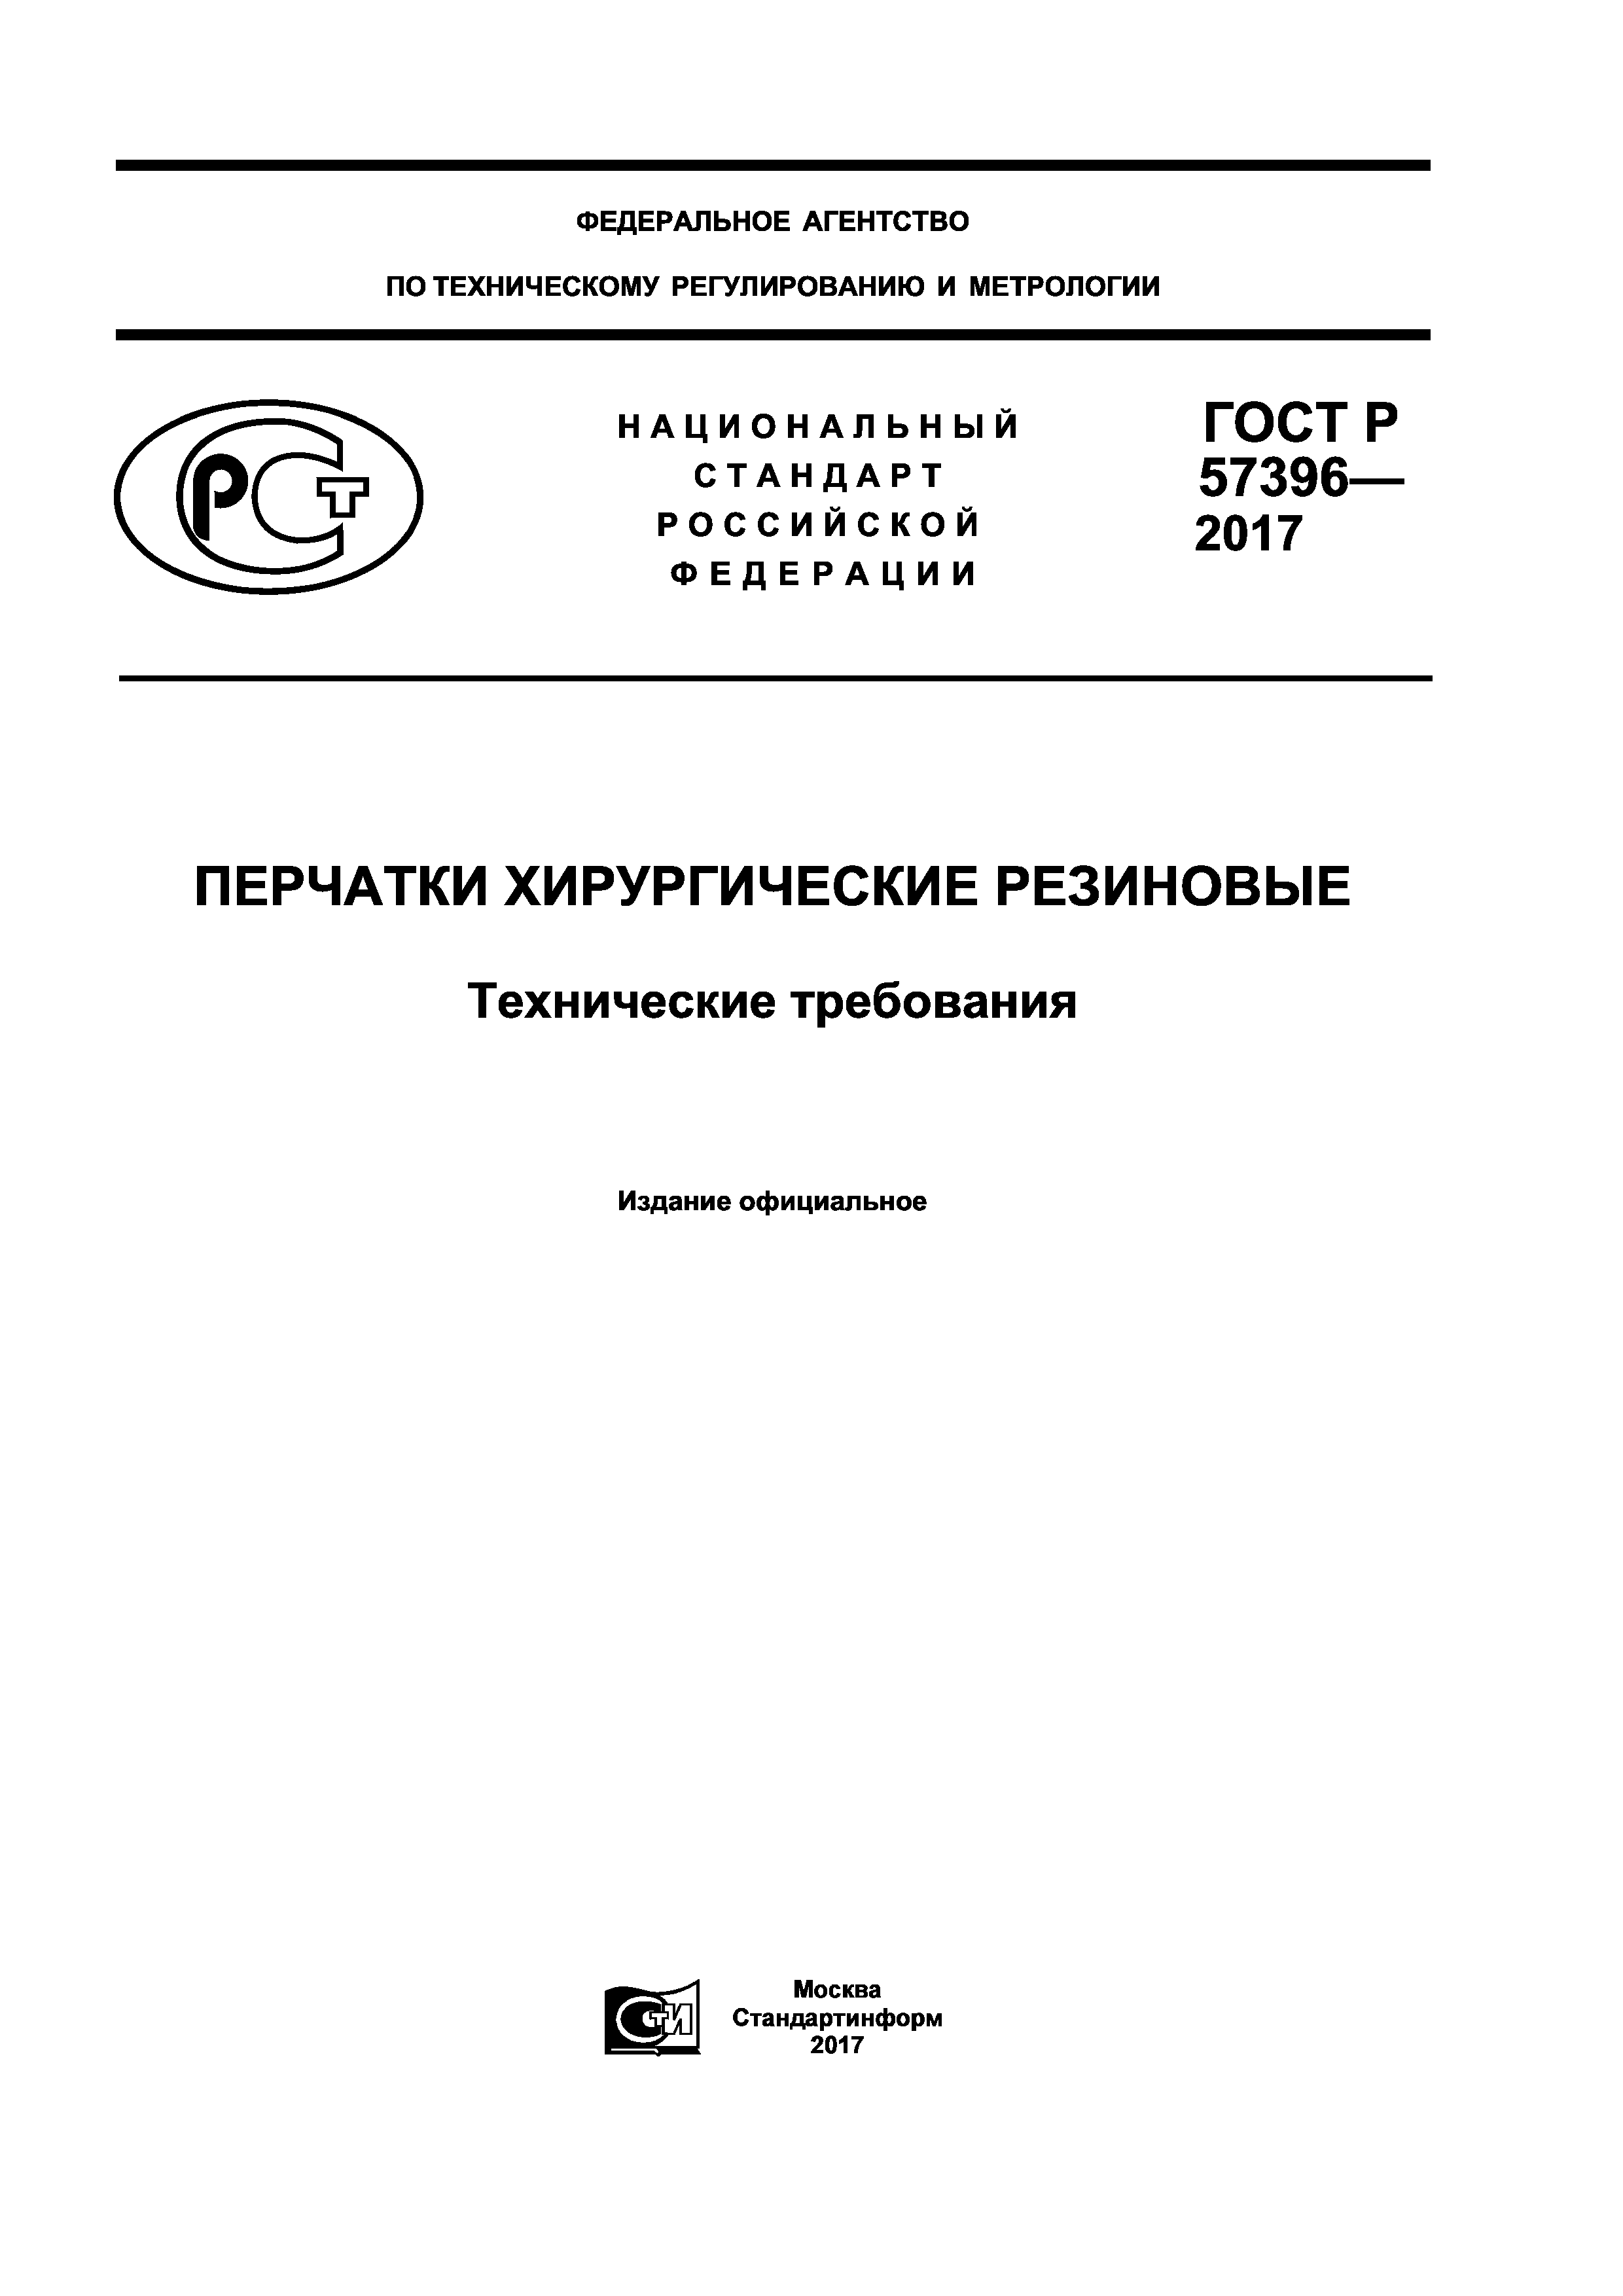 ГОСТ Р 57396-2017